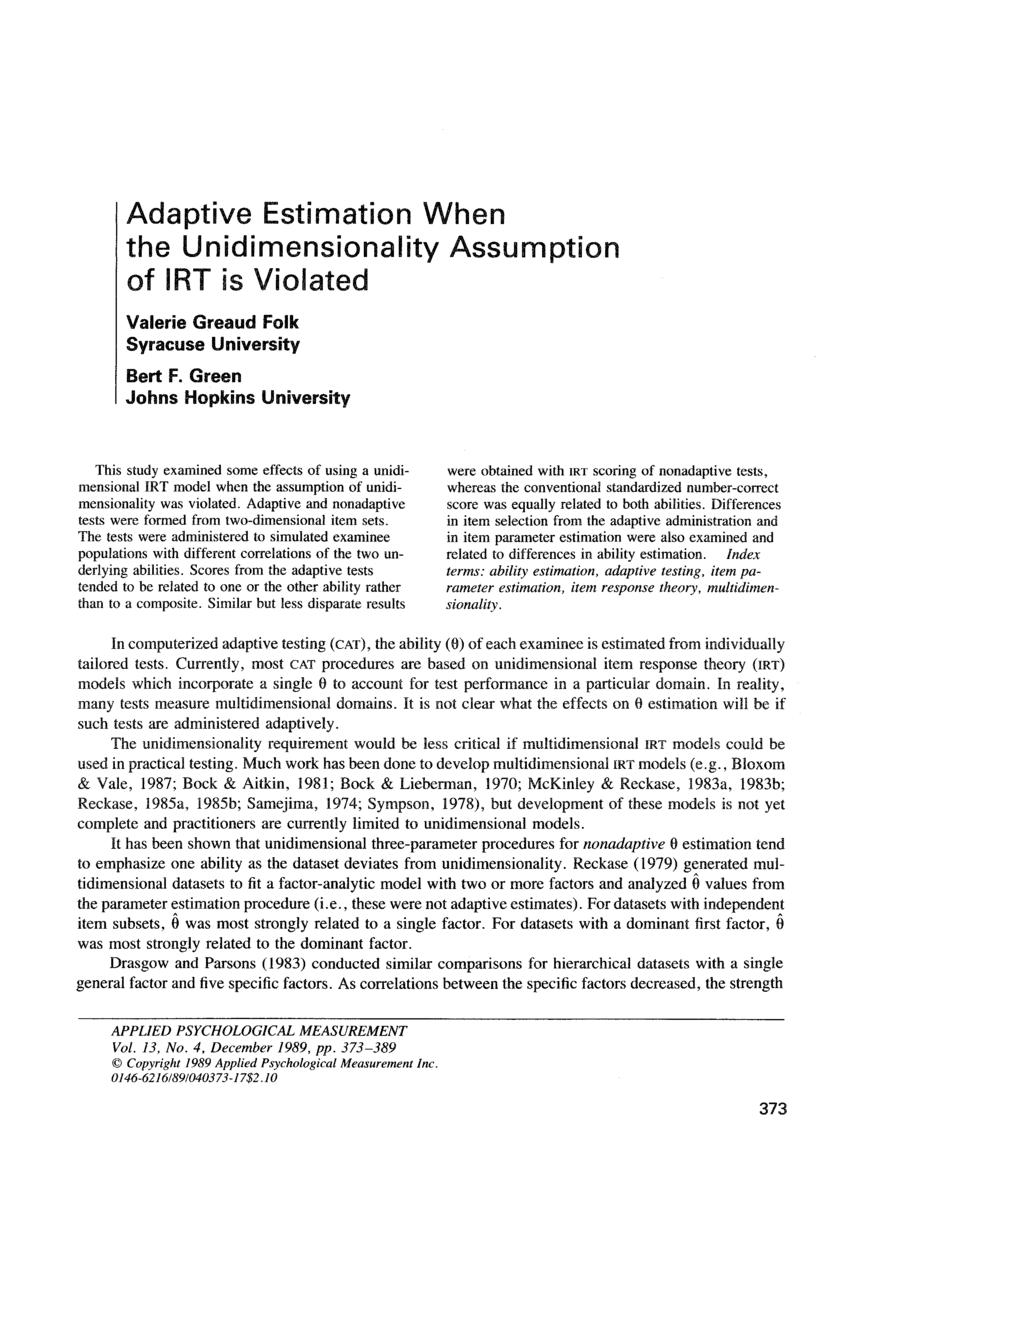 Adaptive Estimation When the Unidimensionality Assumption of IRT is Violated Valerie Greaud Folk Syracuse University Bert F.